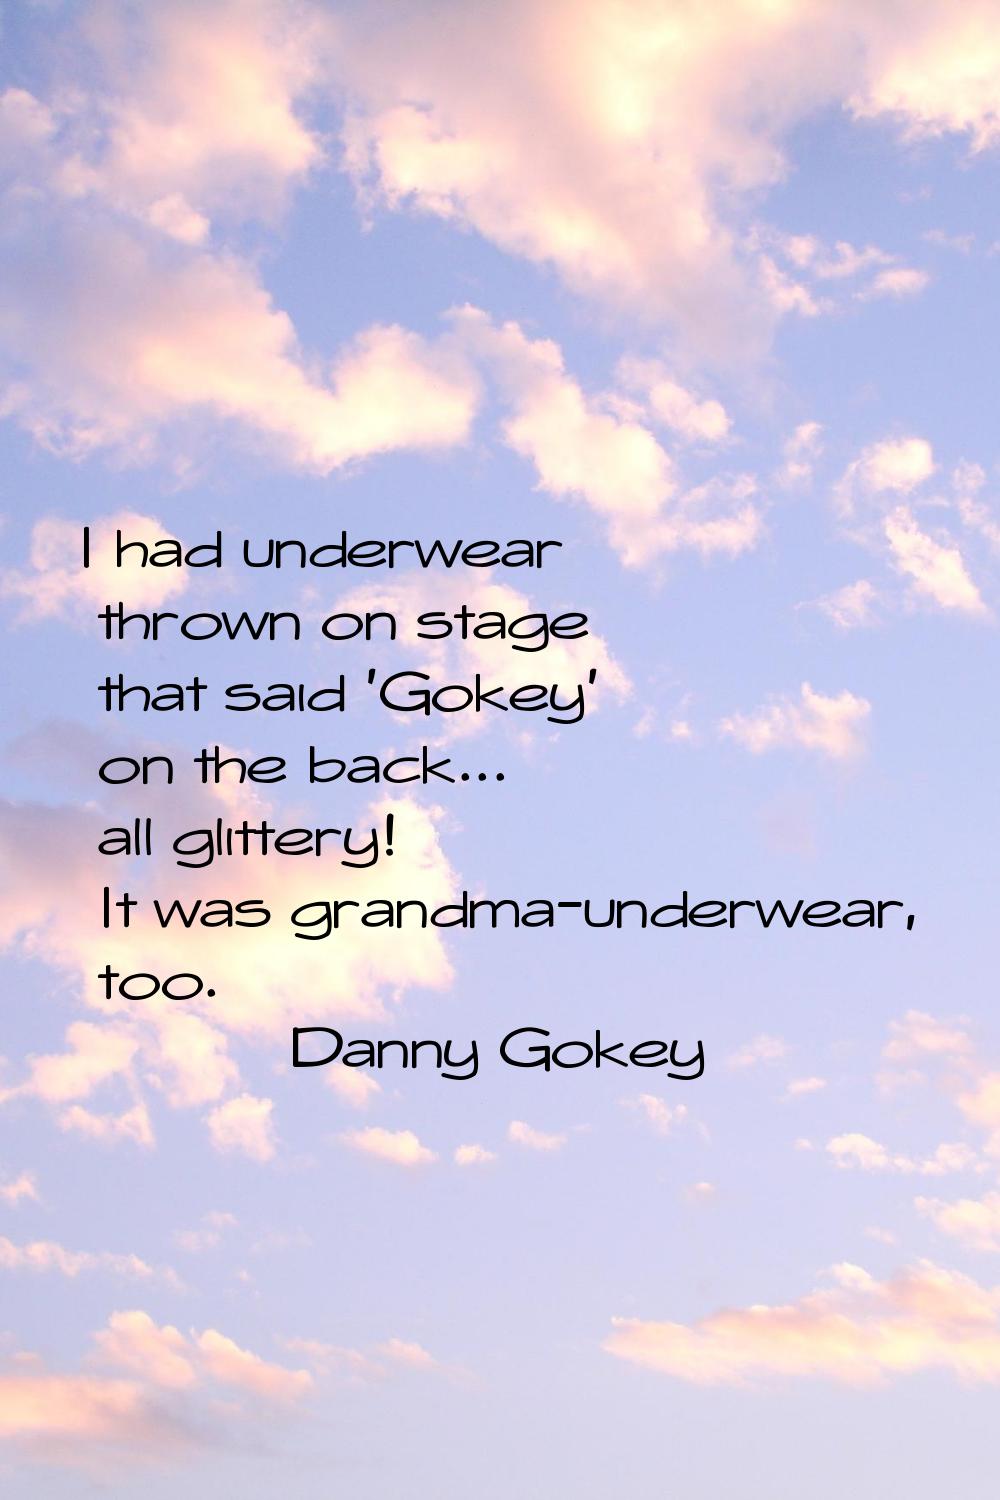 I had underwear thrown on stage that said 'Gokey' on the back... all glittery! It was grandma-under